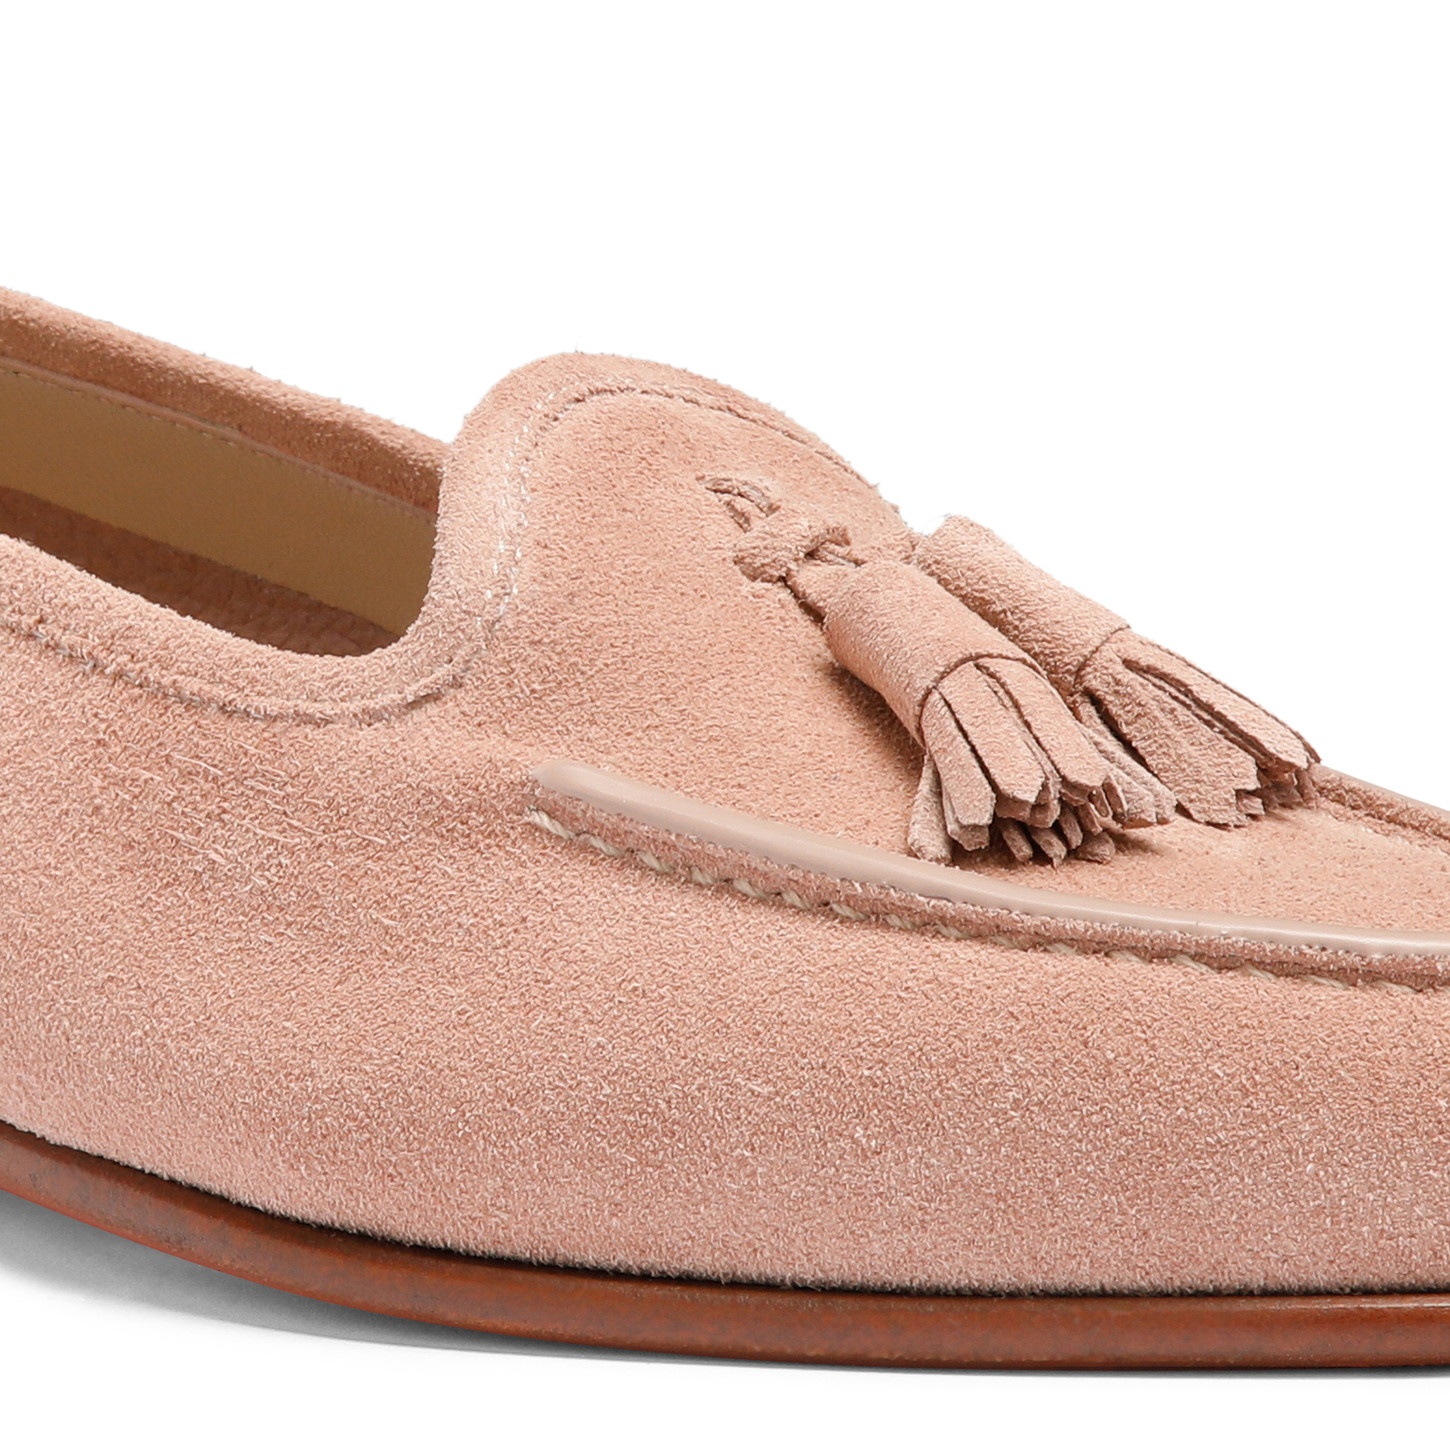 Women's pink suede Andrea tassel loafer - 6